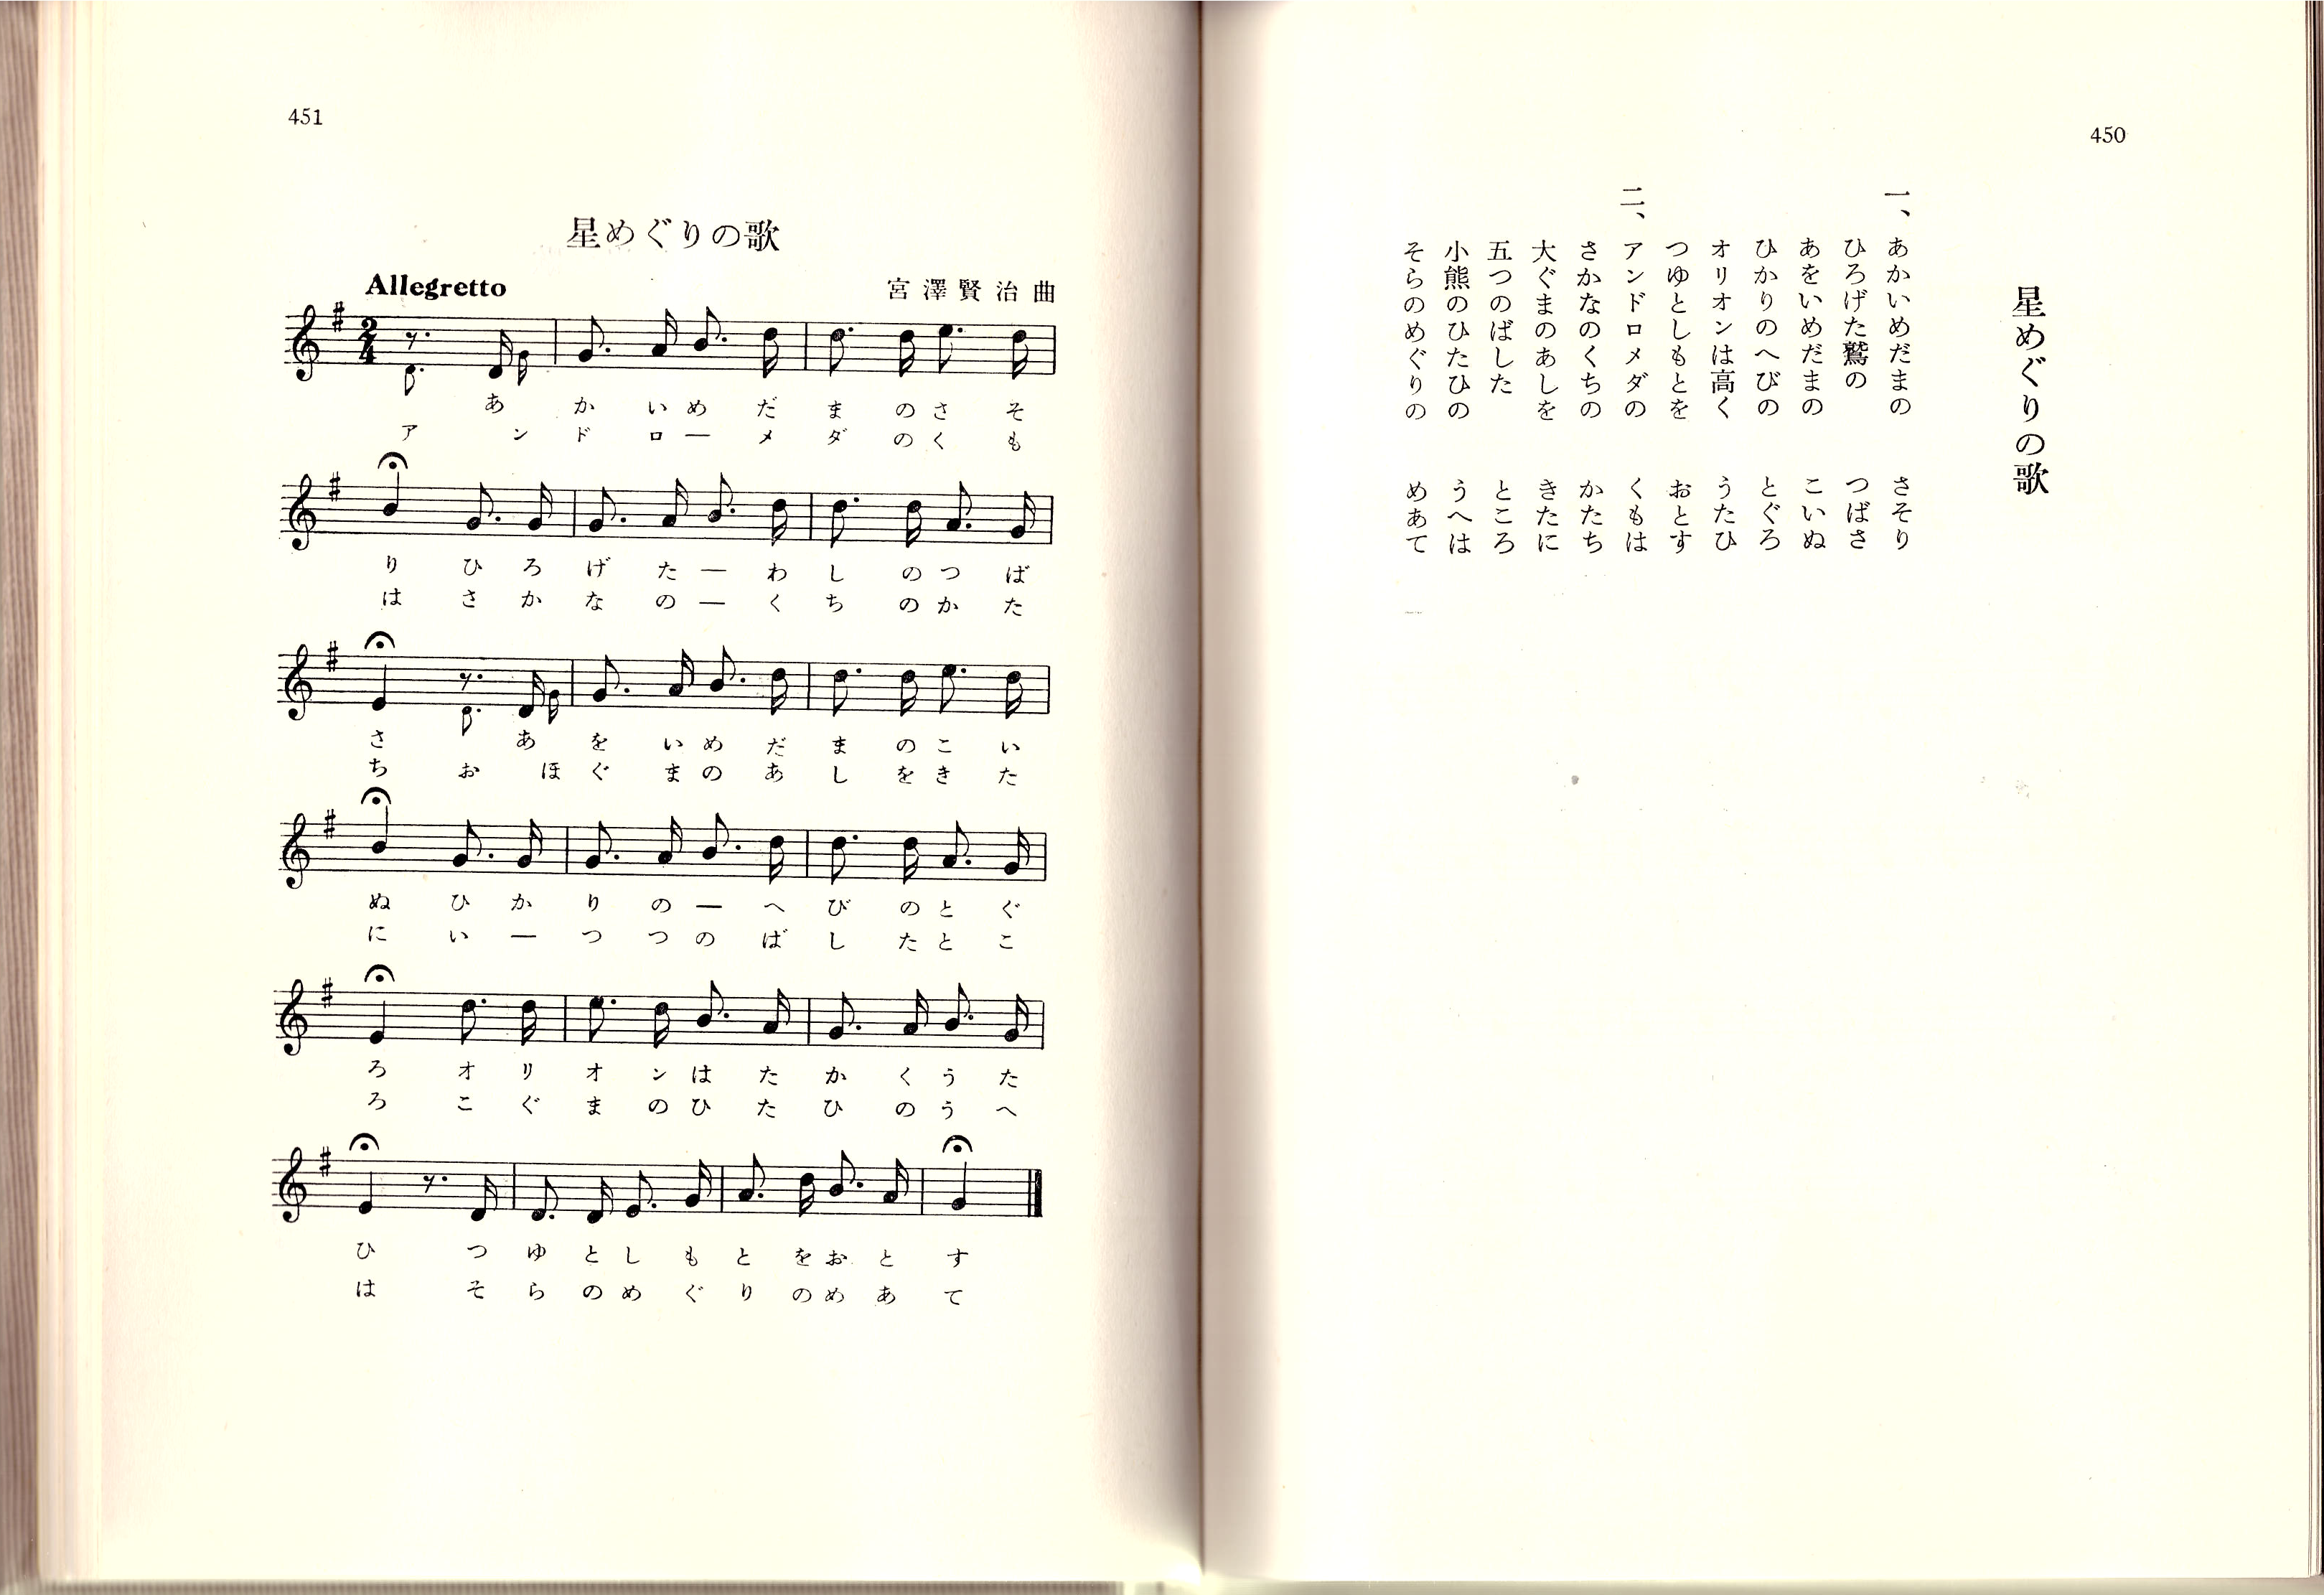 Star Tour Song, from *The Complete Work of Miyazawa Kenji*, Chikuma Shobō